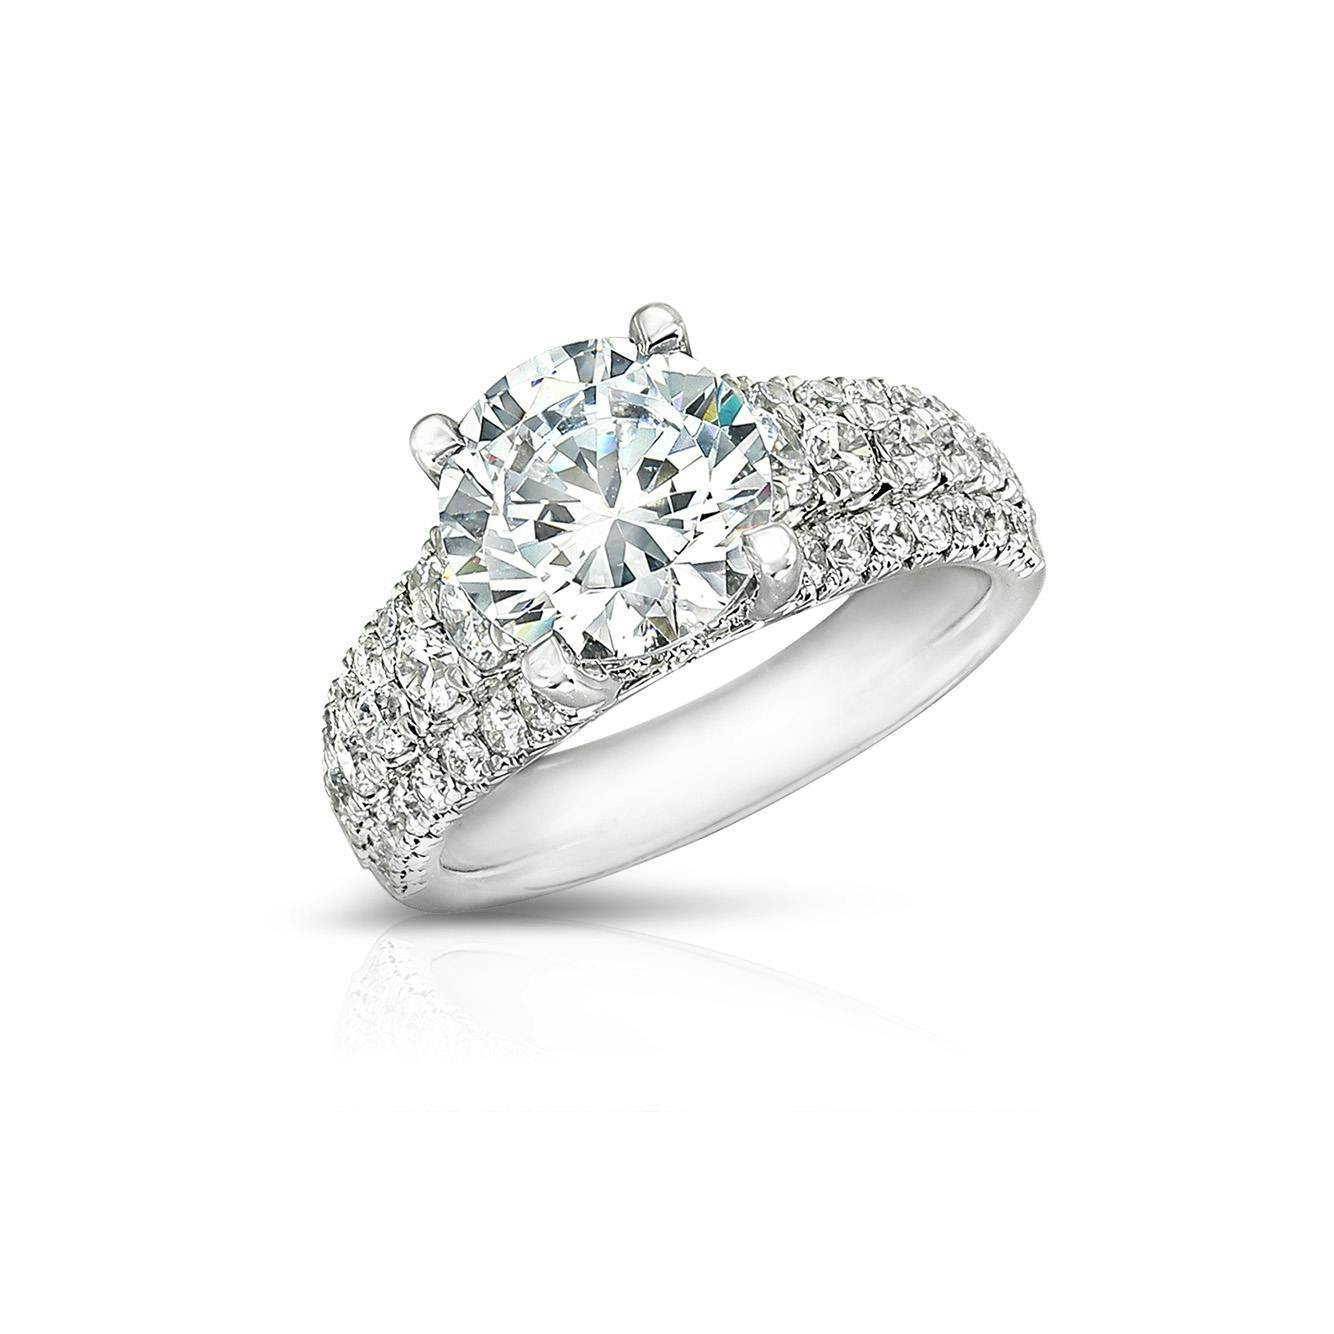 18k white gold diamond ring natural center stone diamond wide pave setting